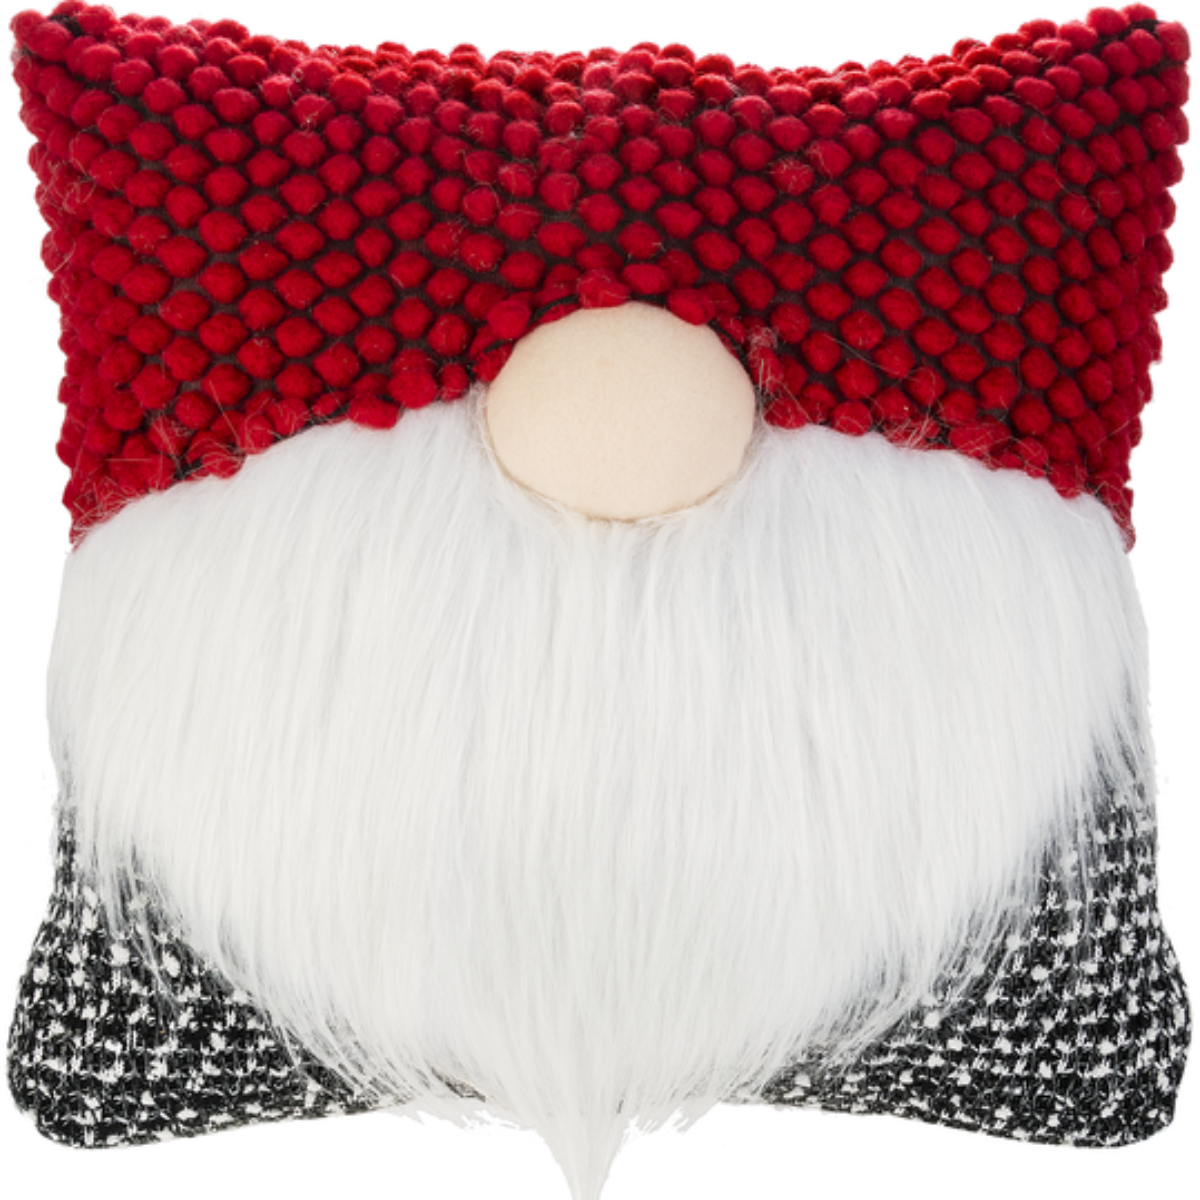 Decorative Gnome Pillow-Iron Accents